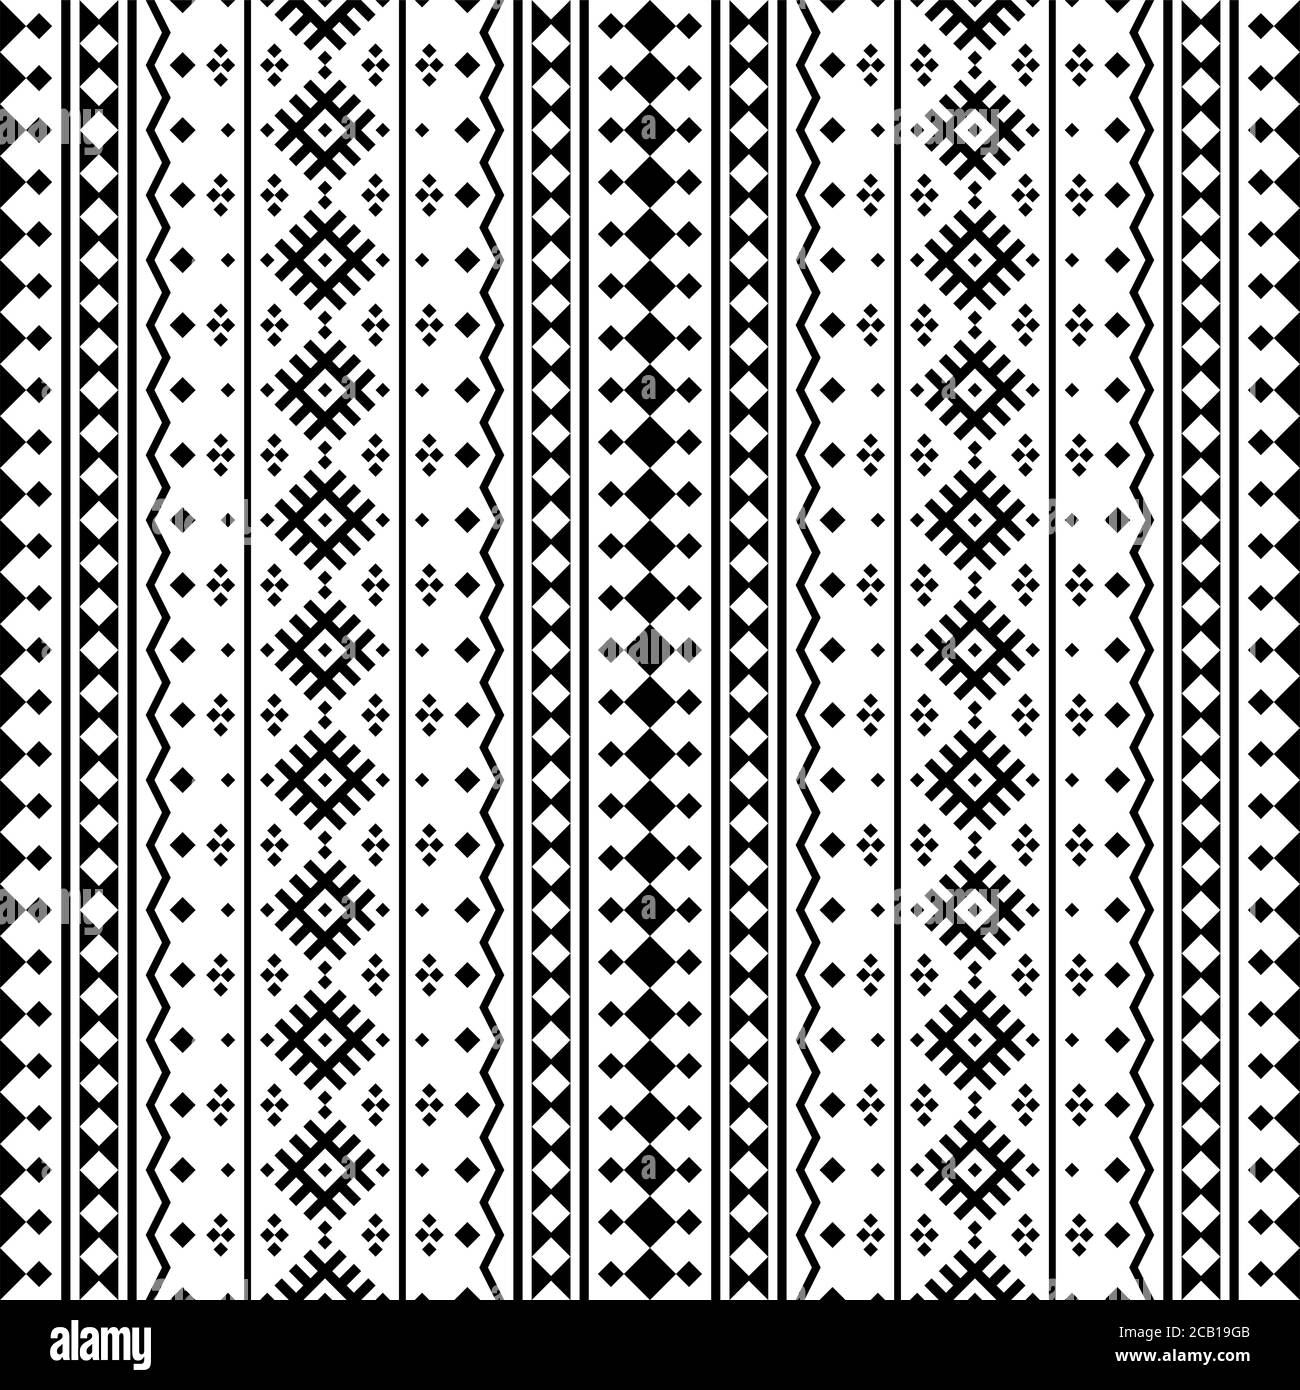 aztec ethnic pattern motif texture background design Stock Photo